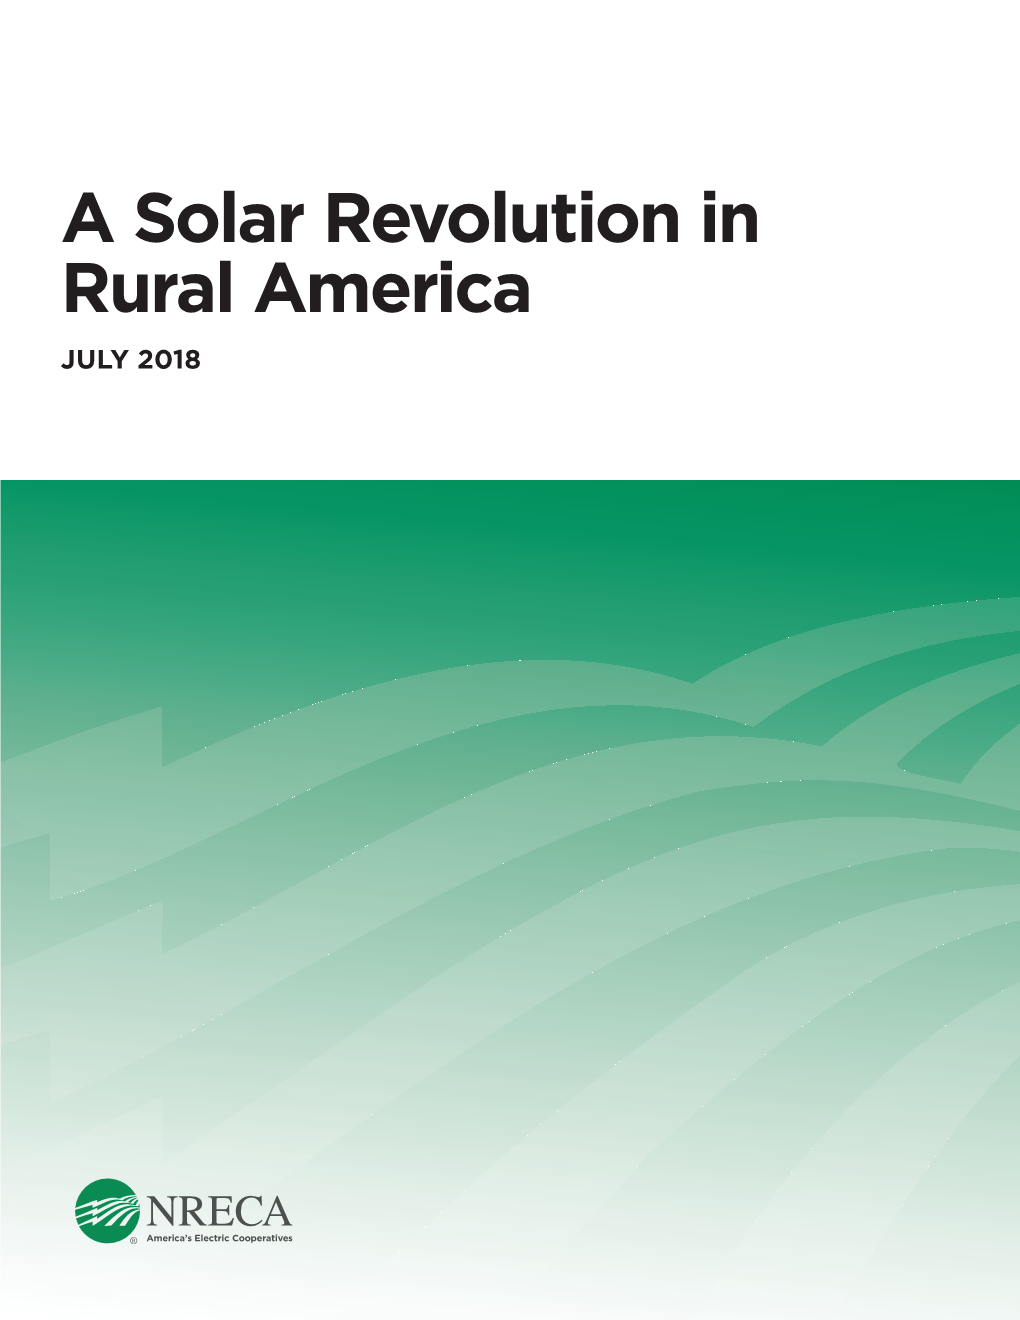 A Solar Revolution in Rural America